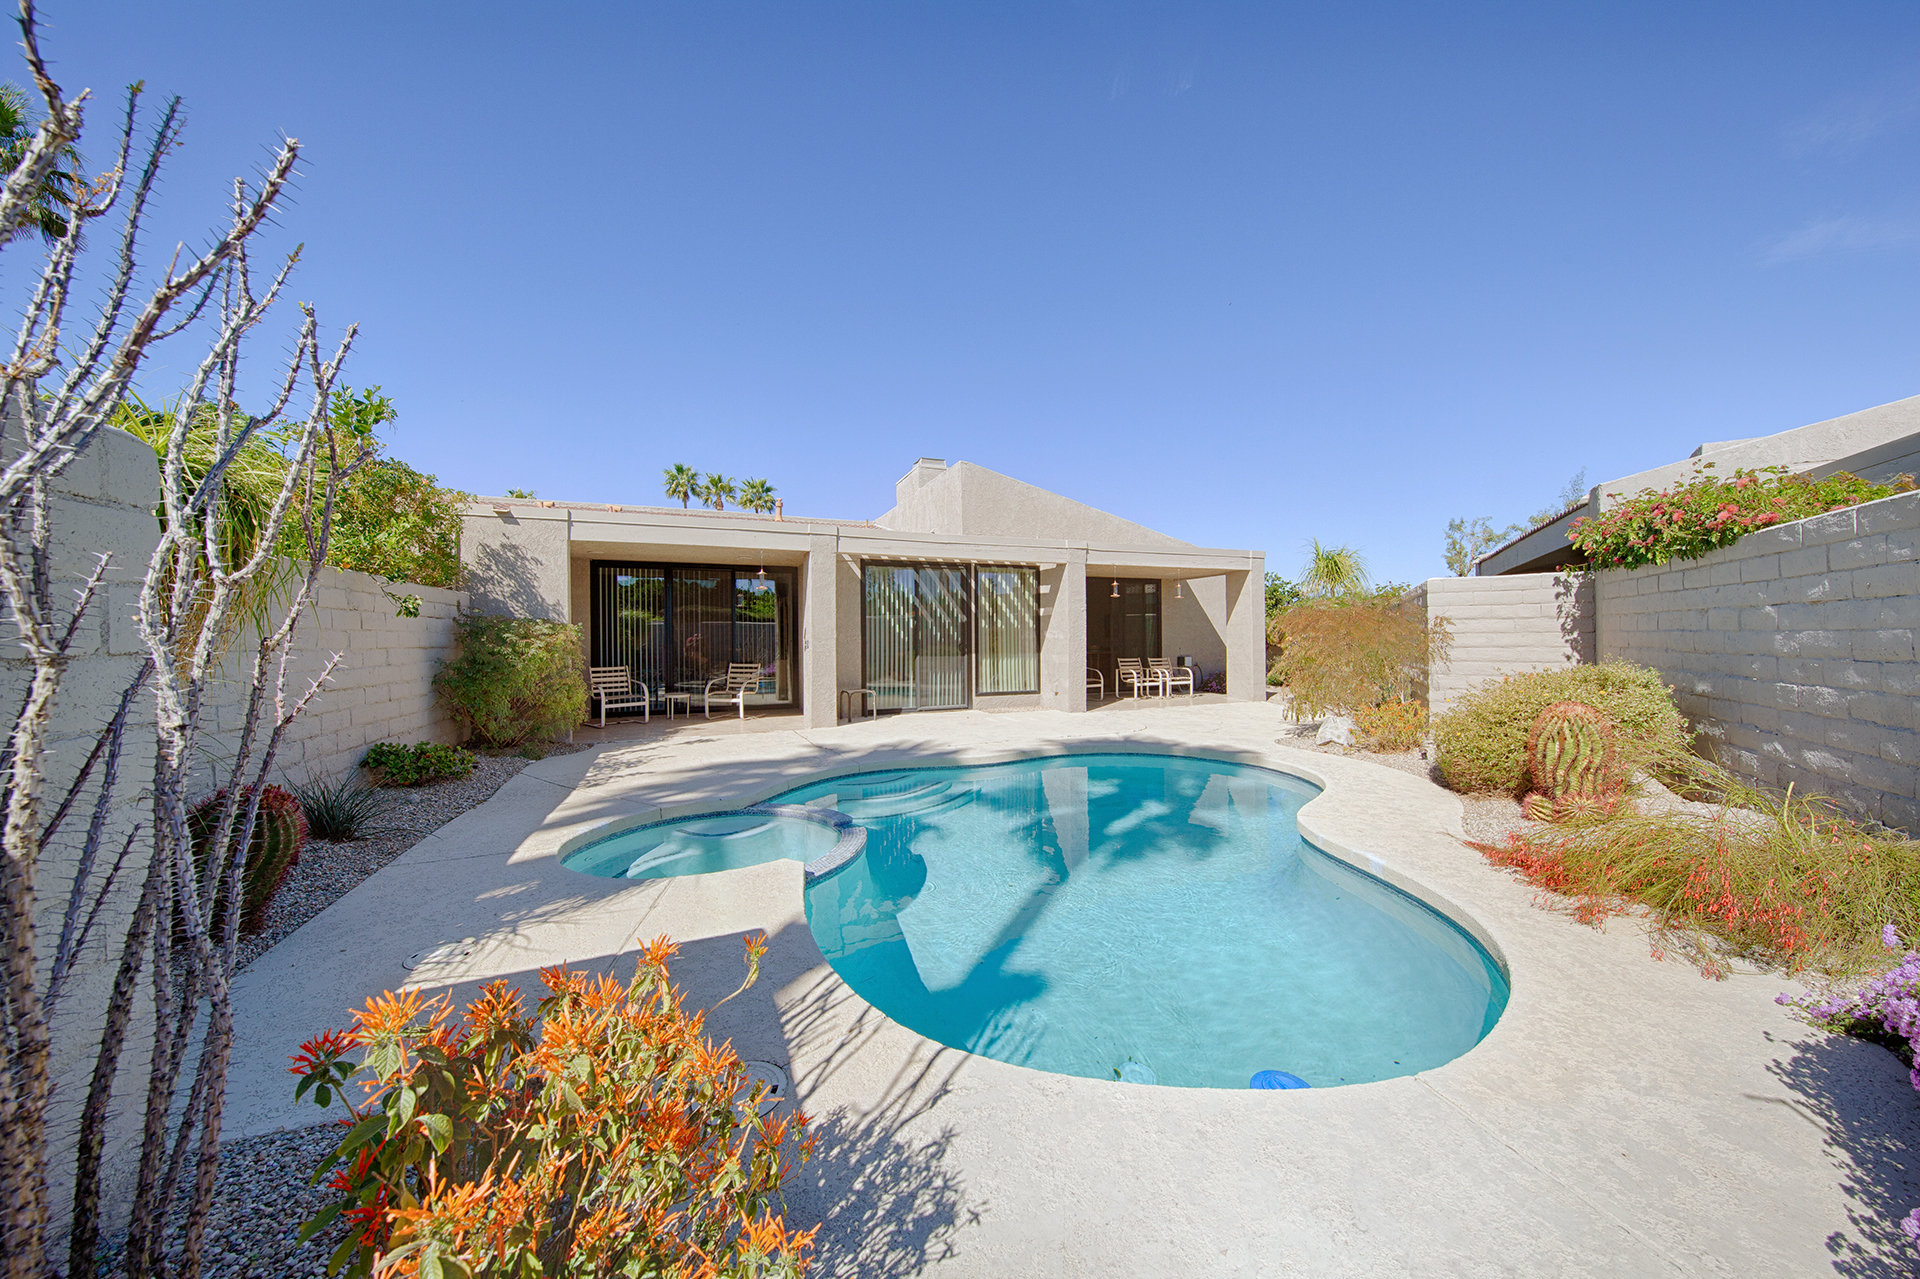 A backyard swimming pool in Sundance Resort in Palm Springs